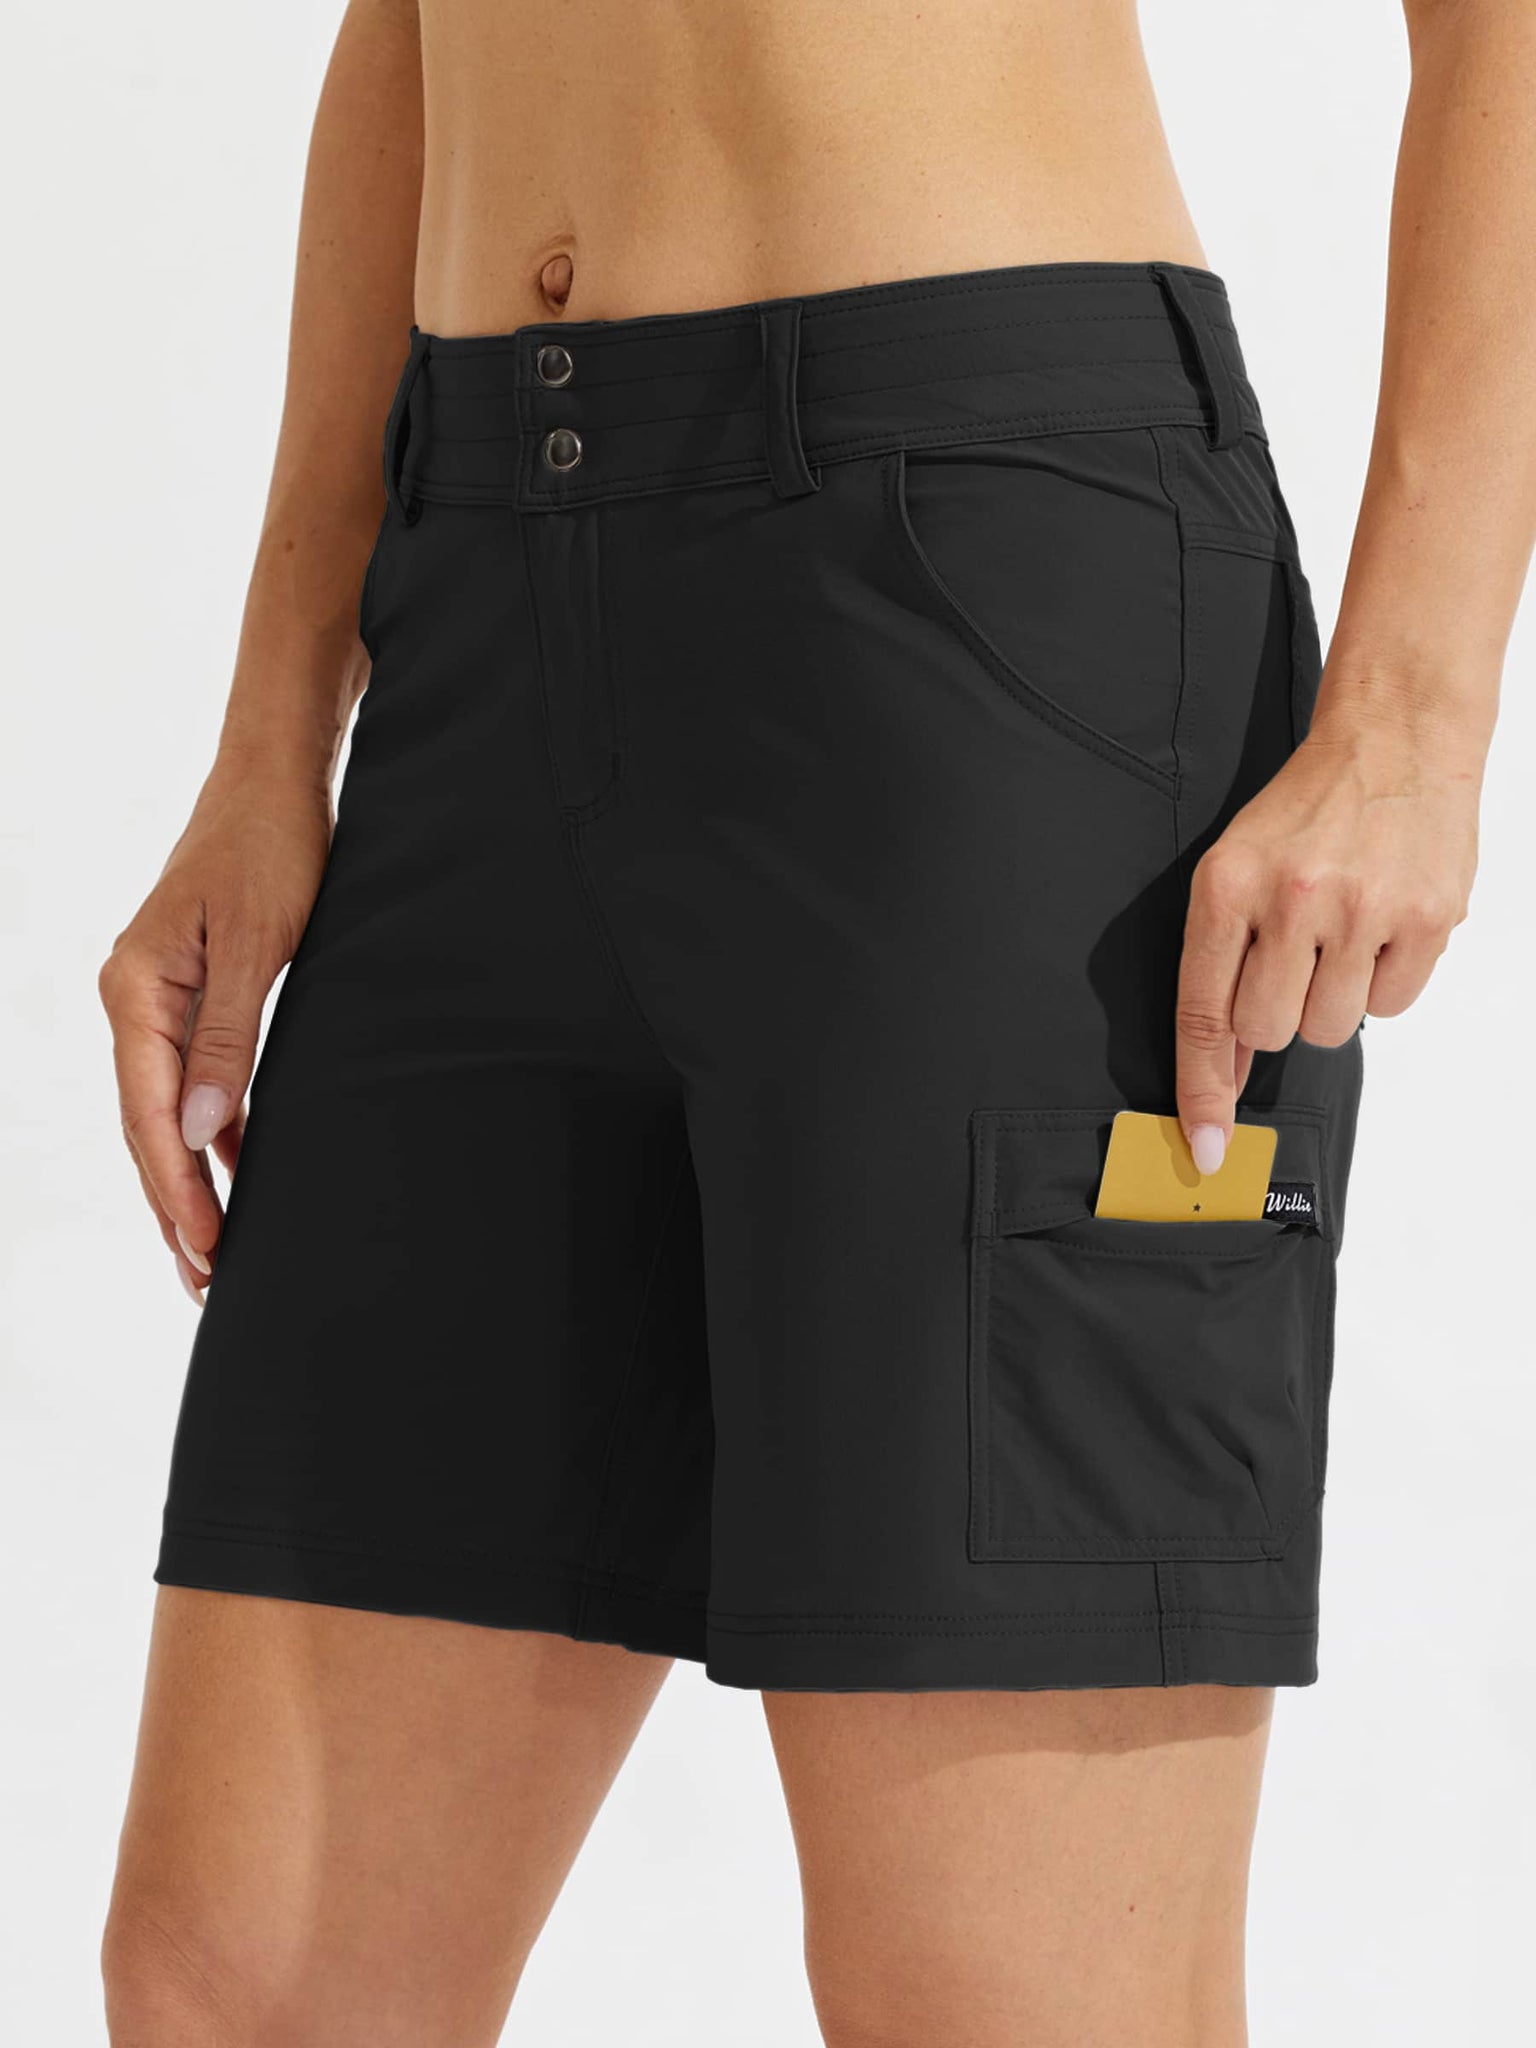 Women's Outdoor Pro Shorts Black_hover_model